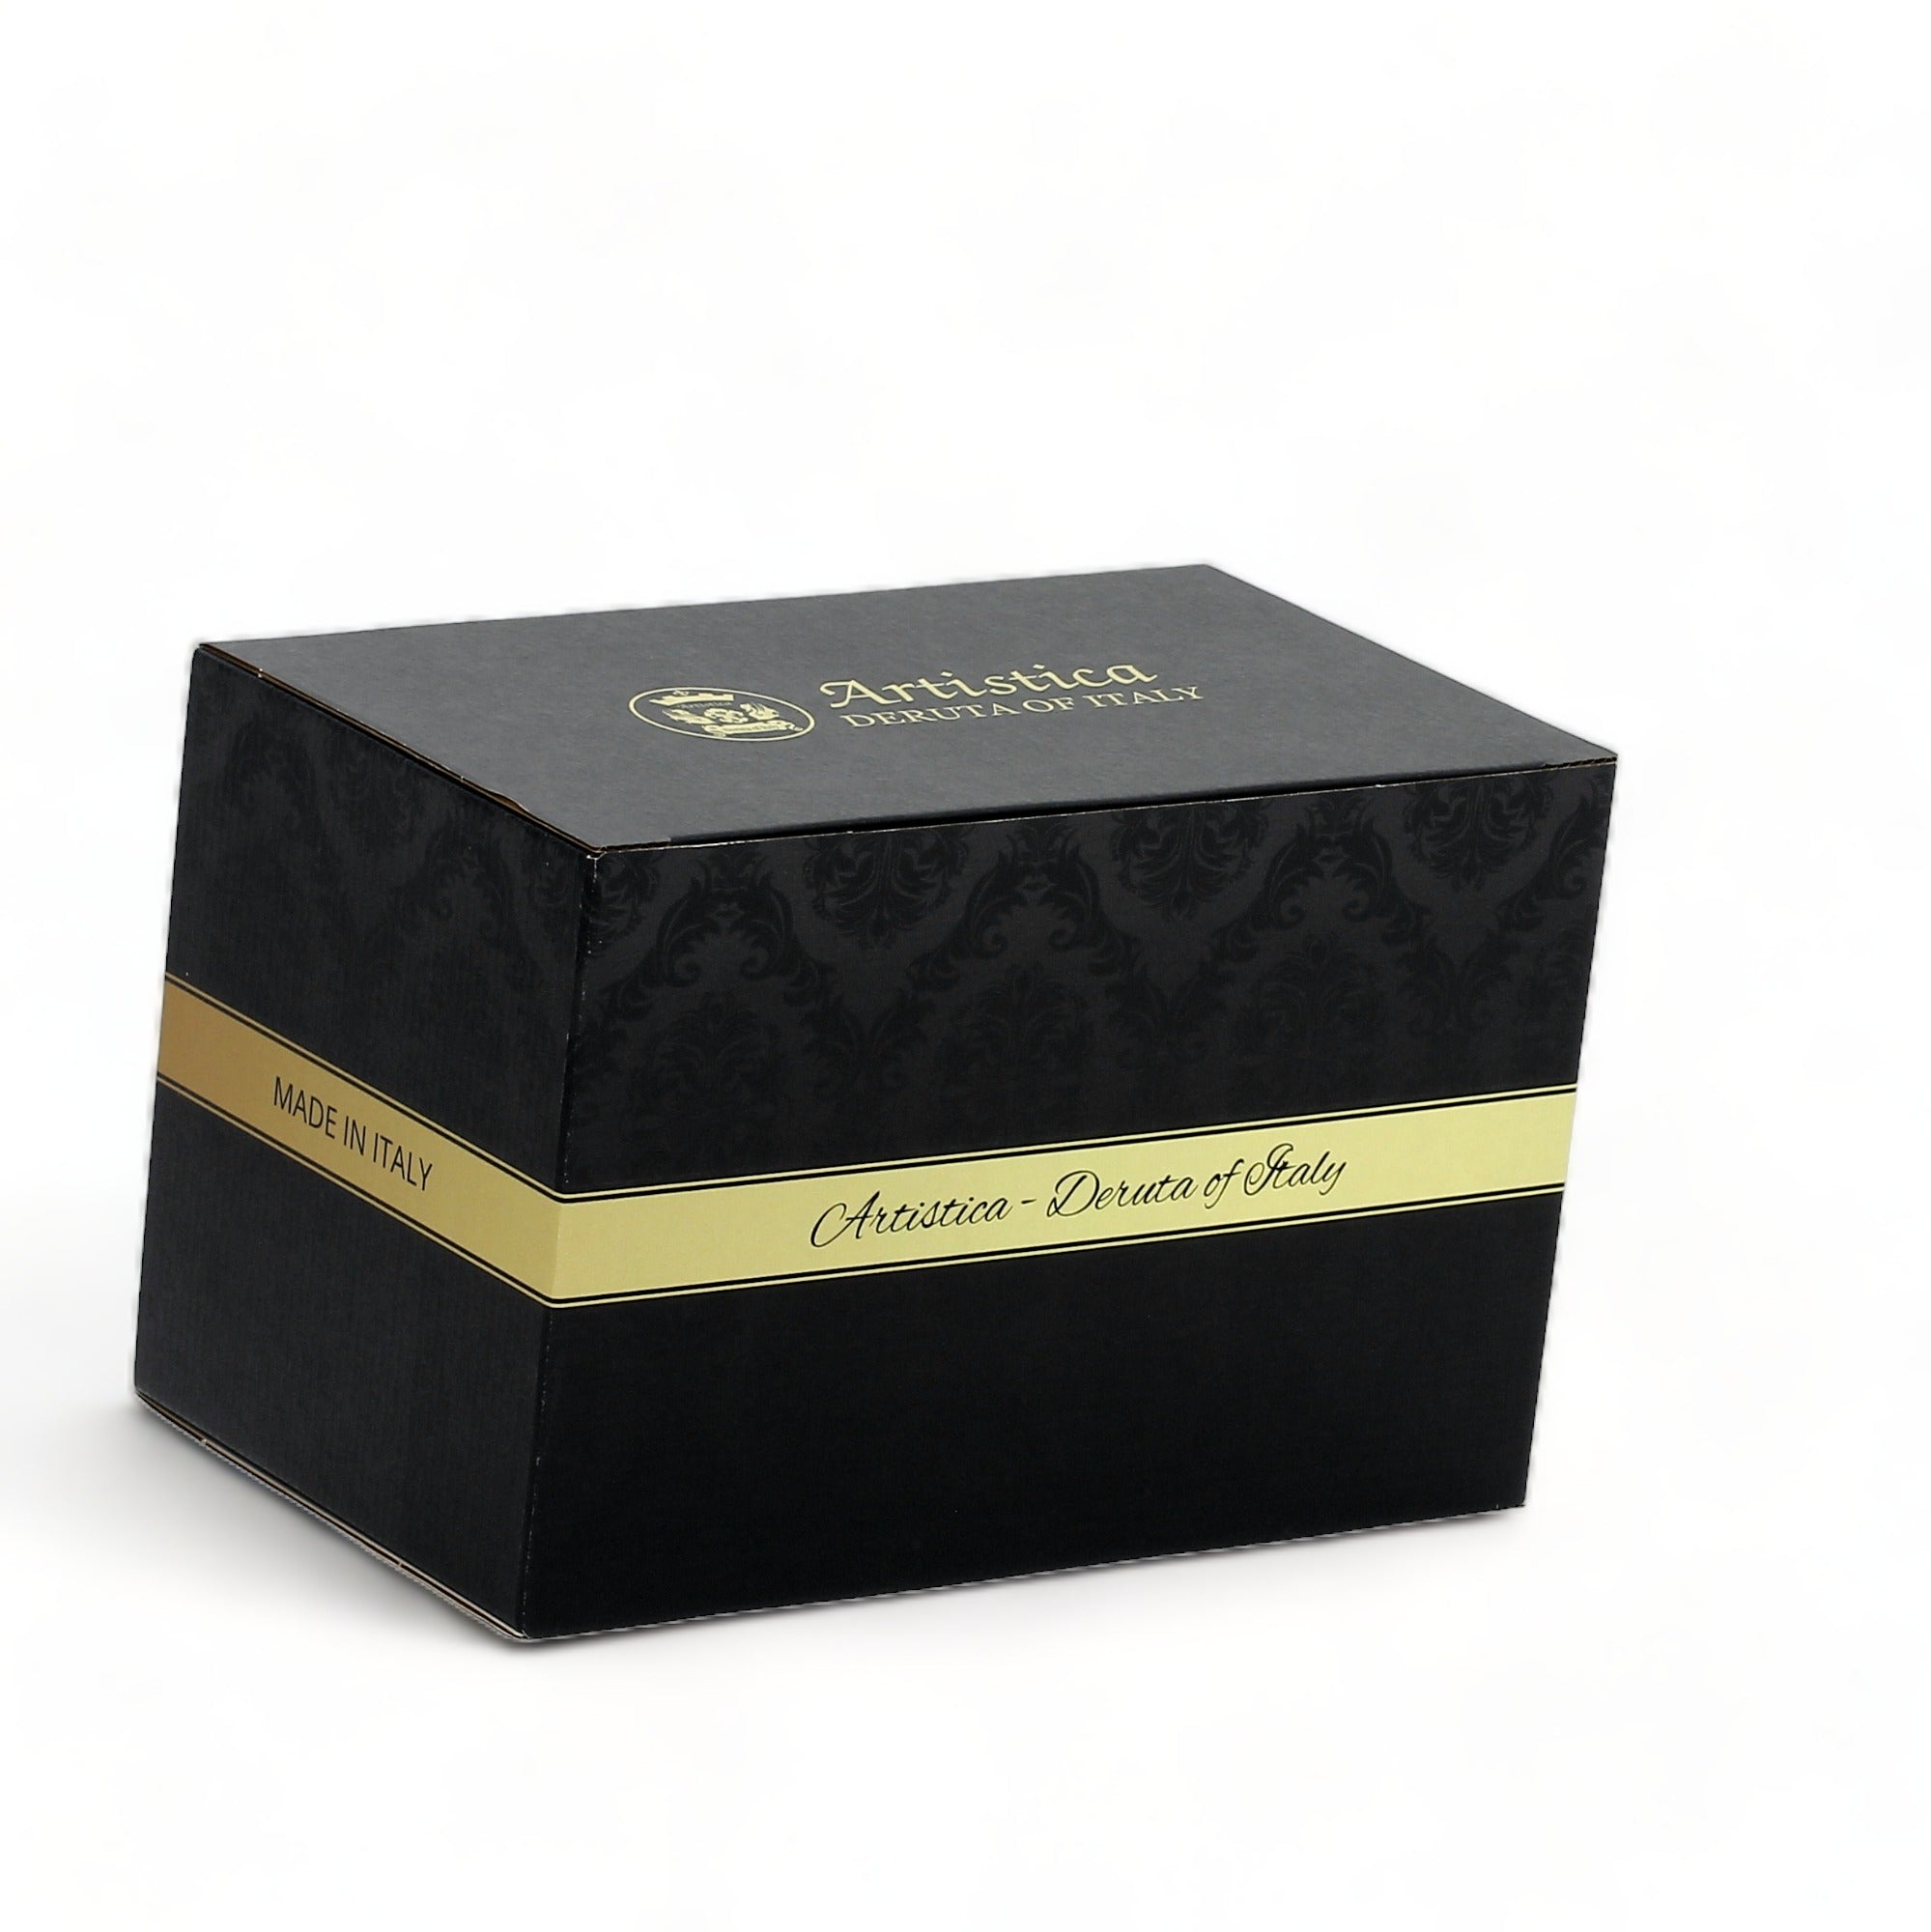 GIFT BOX: With authentic Deruta hand painted ceramic - Teapot Deluxe Raffaellesco Design